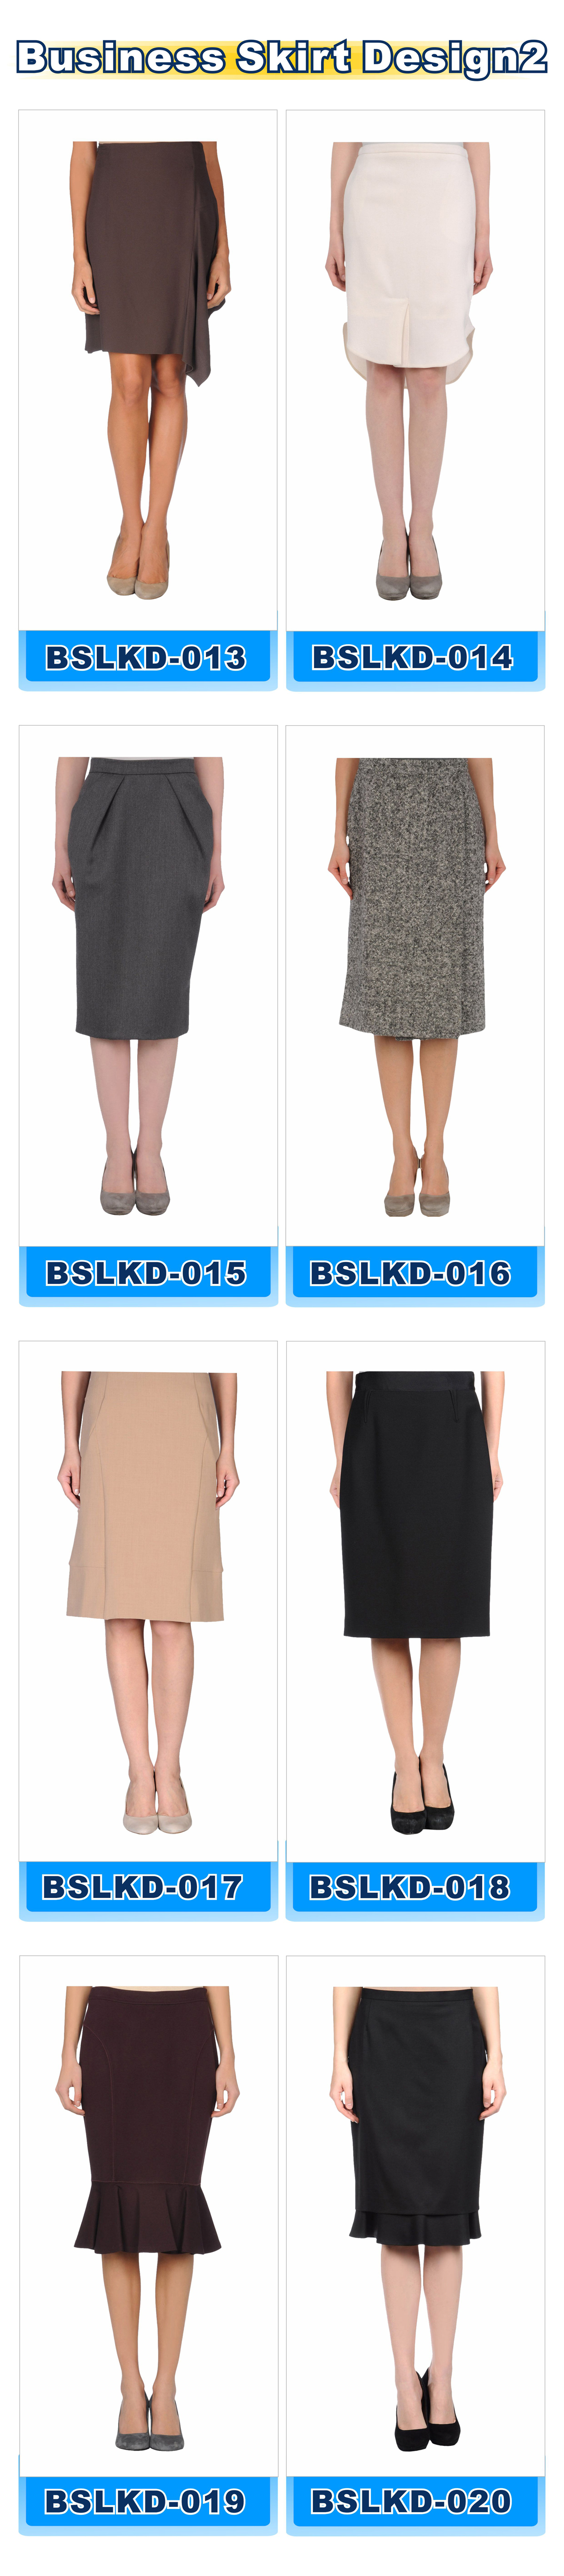 business skirts design2